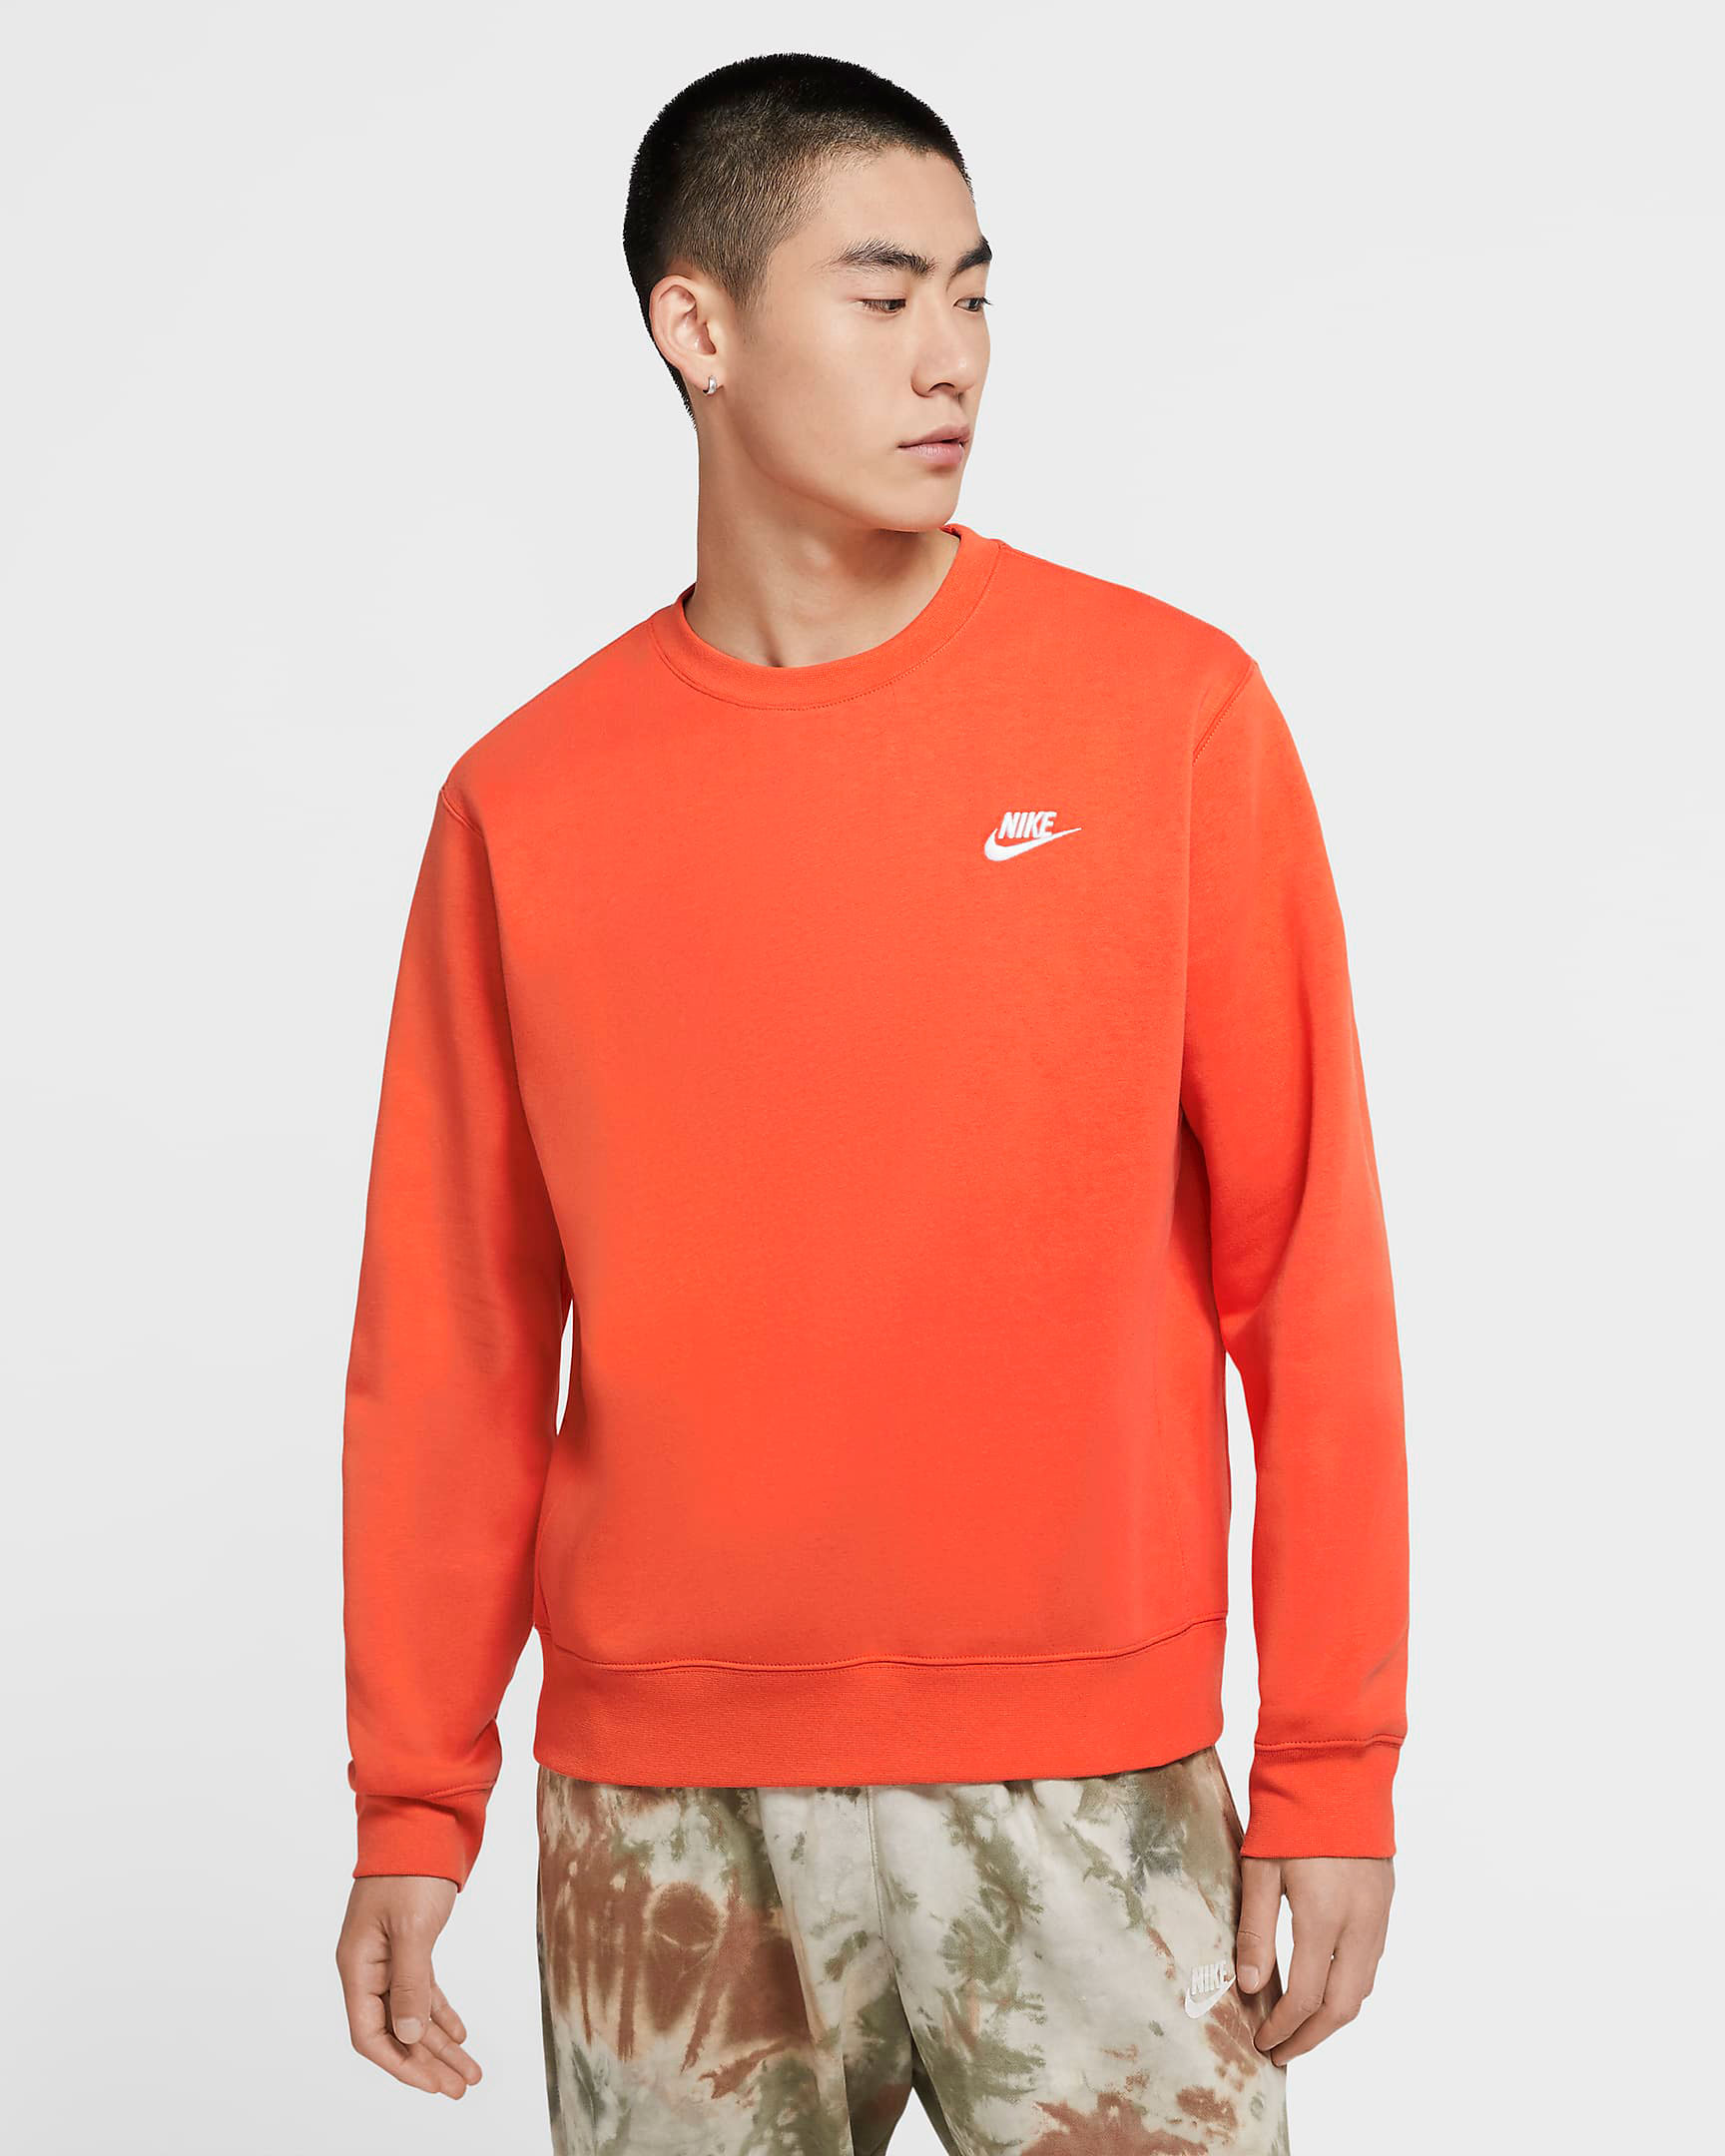 nike-dunk-high-syracuse-orange-sweatshirt